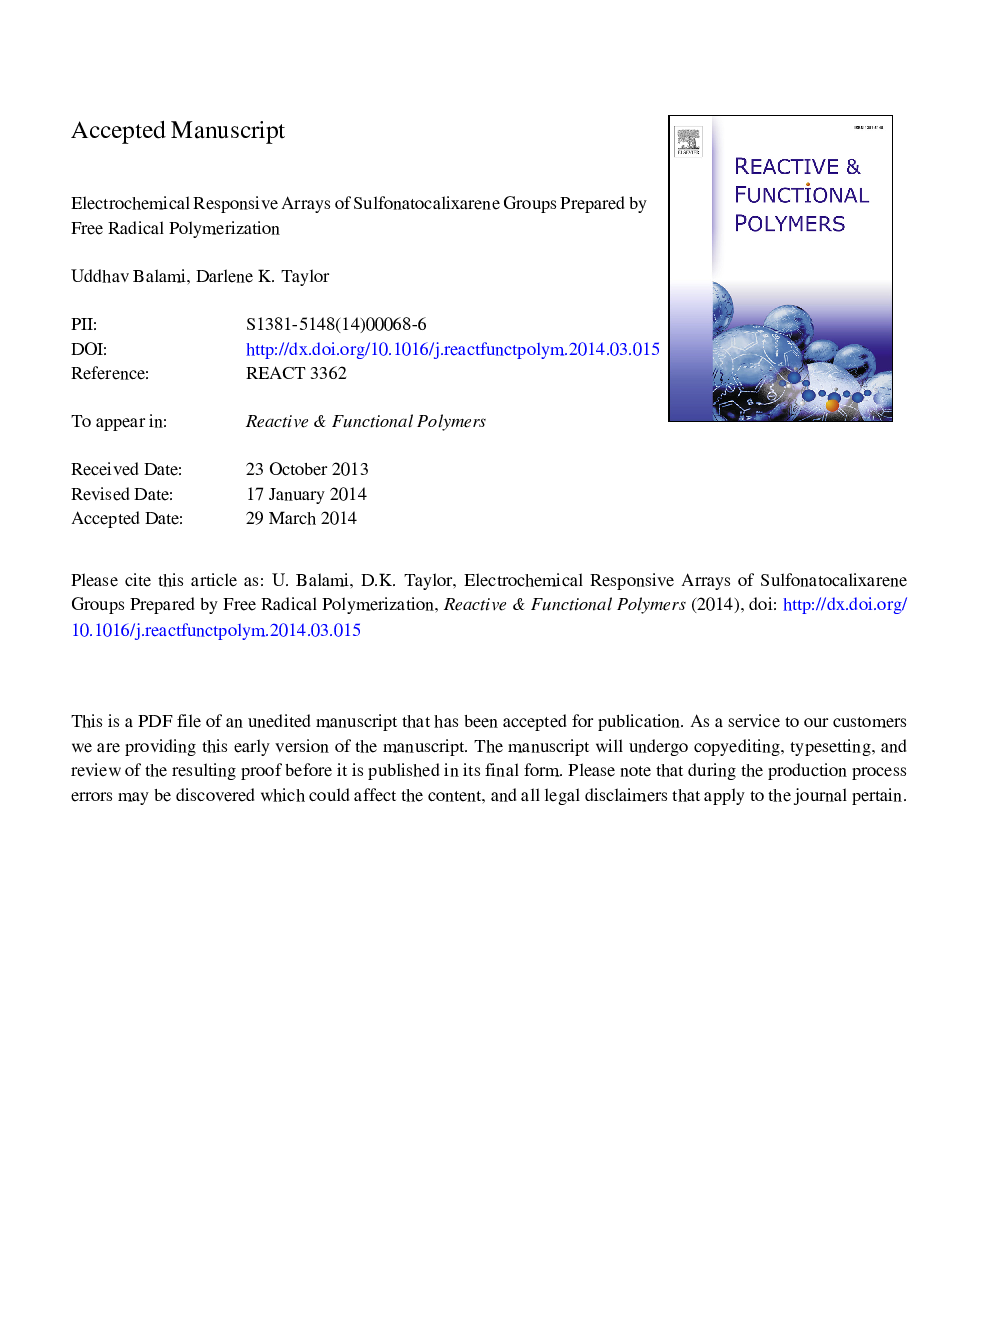 Electrochemical responsive arrays of sulfonatocalixarene groups prepared by free radical polymerization